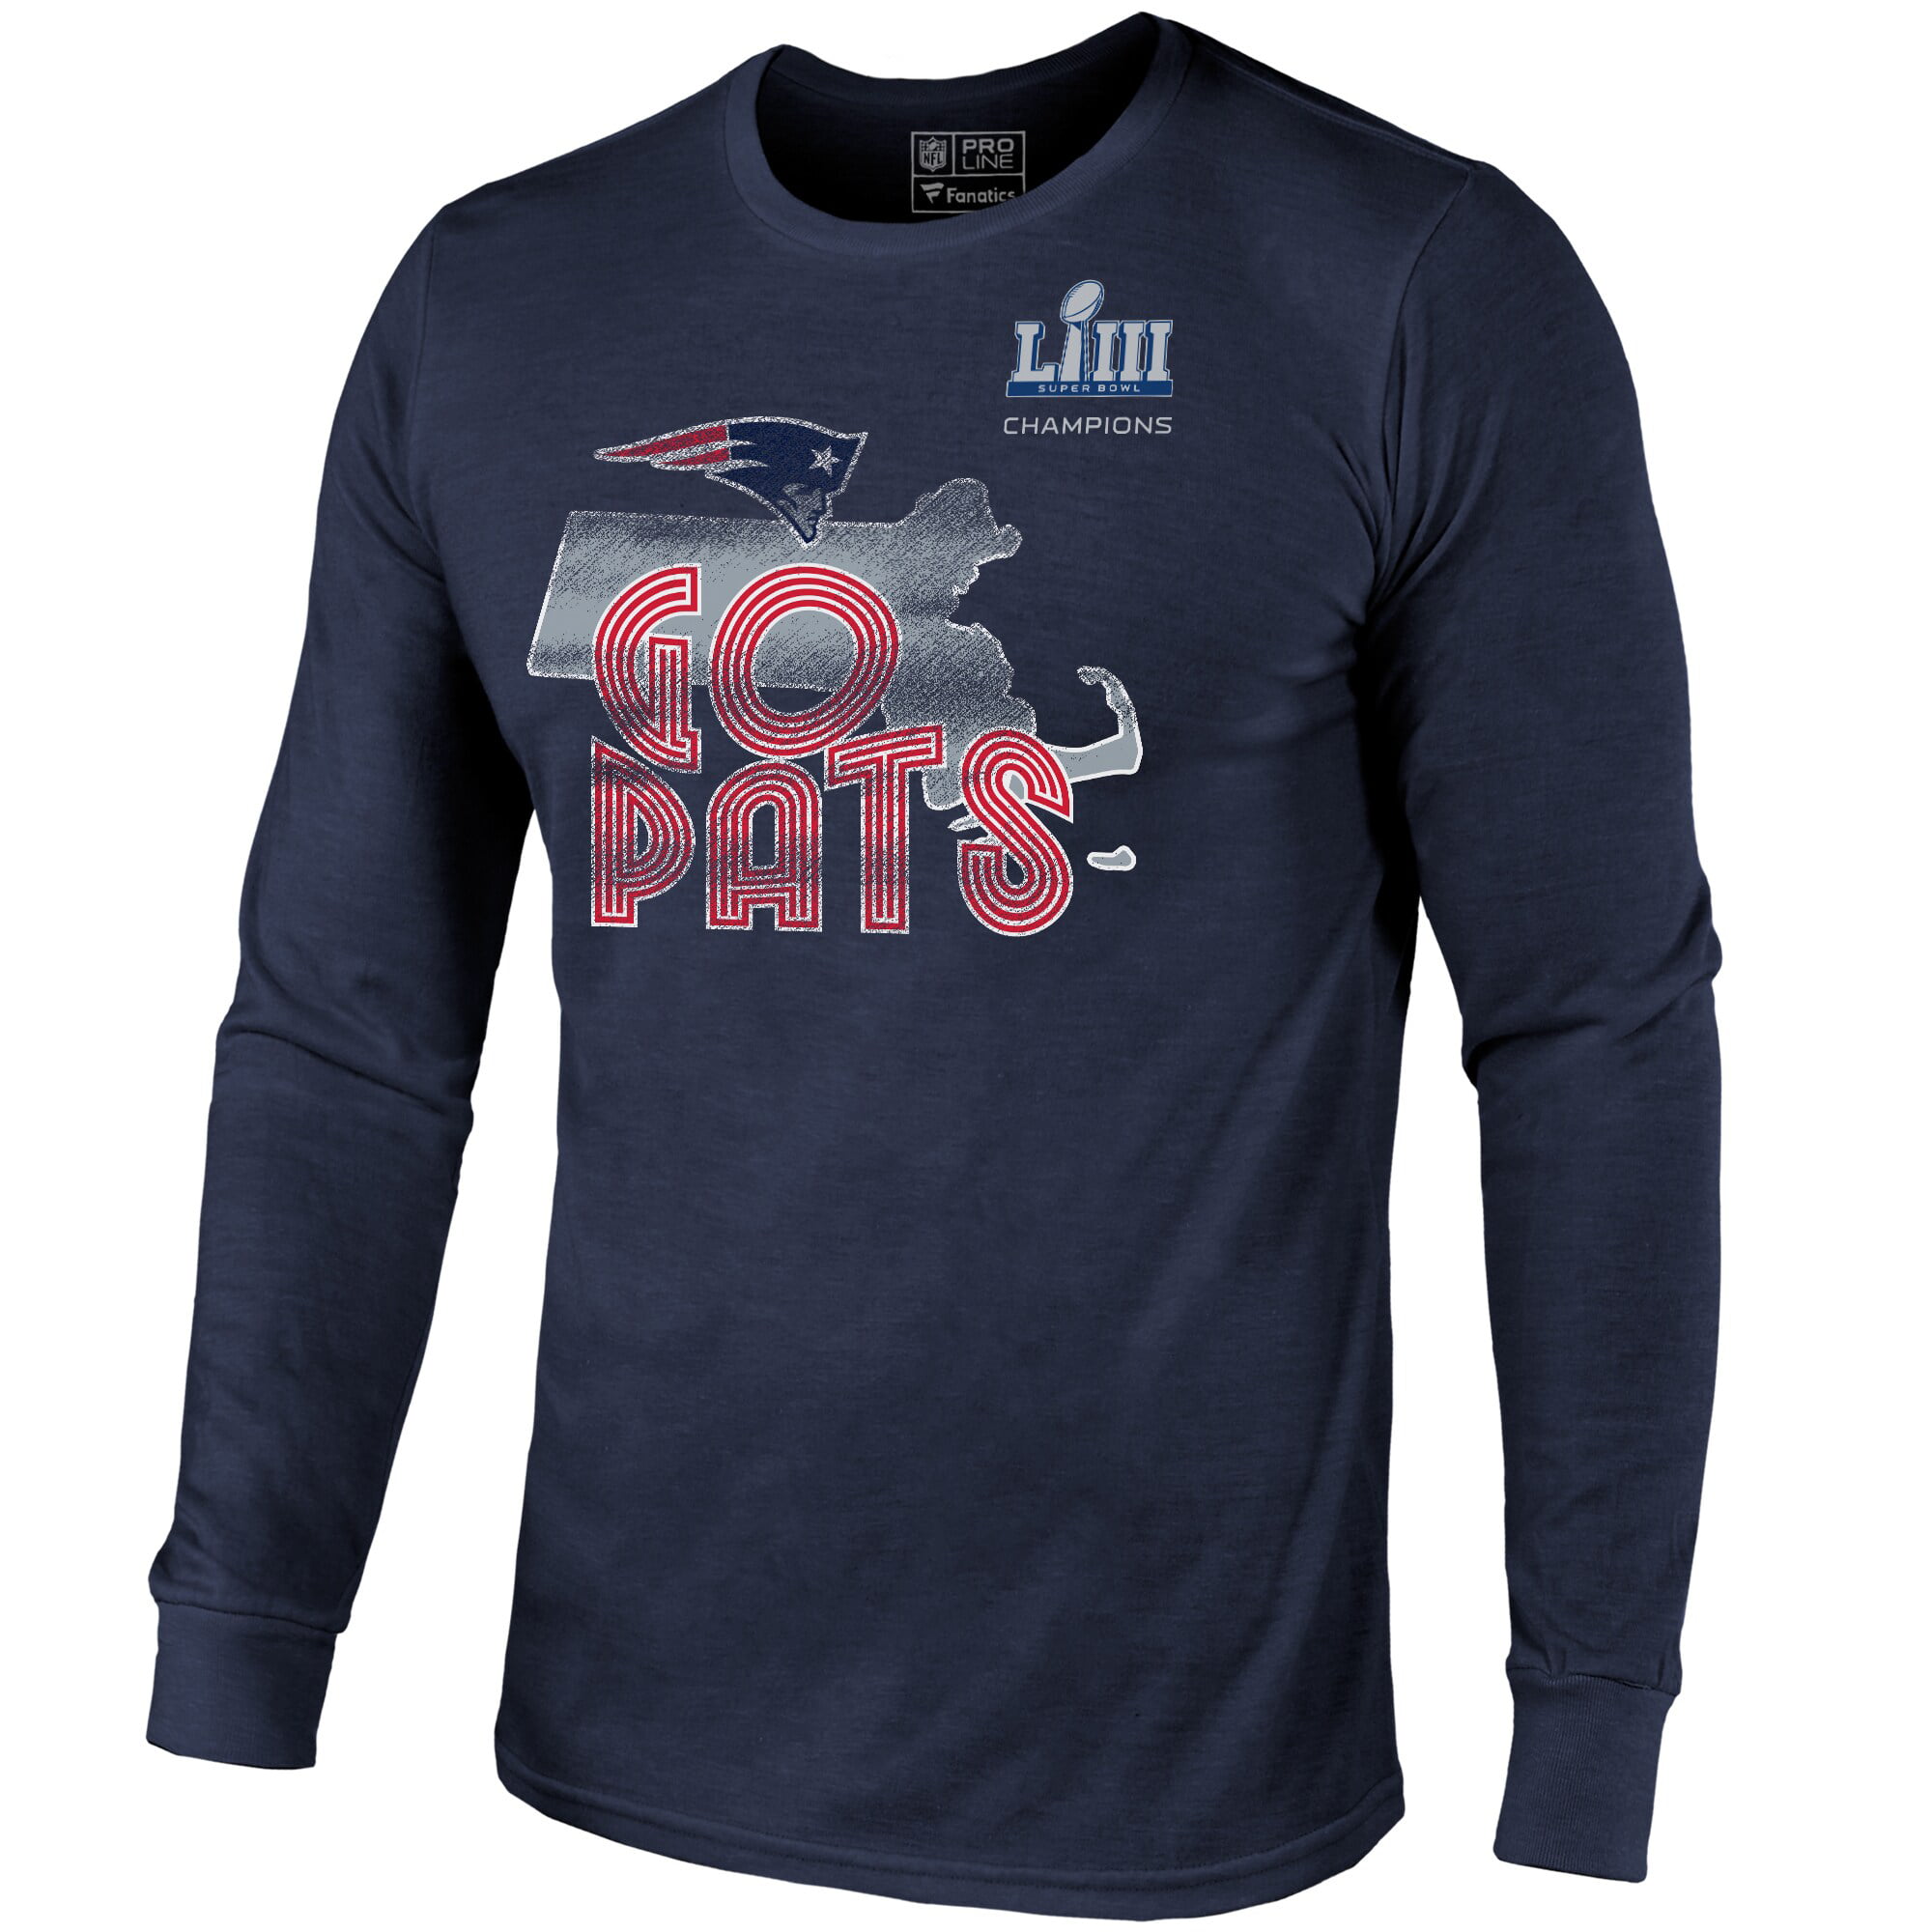 Boys Crew Neck Official Patriots Super Bowl LIII Champions T-Shirt Blue Large 